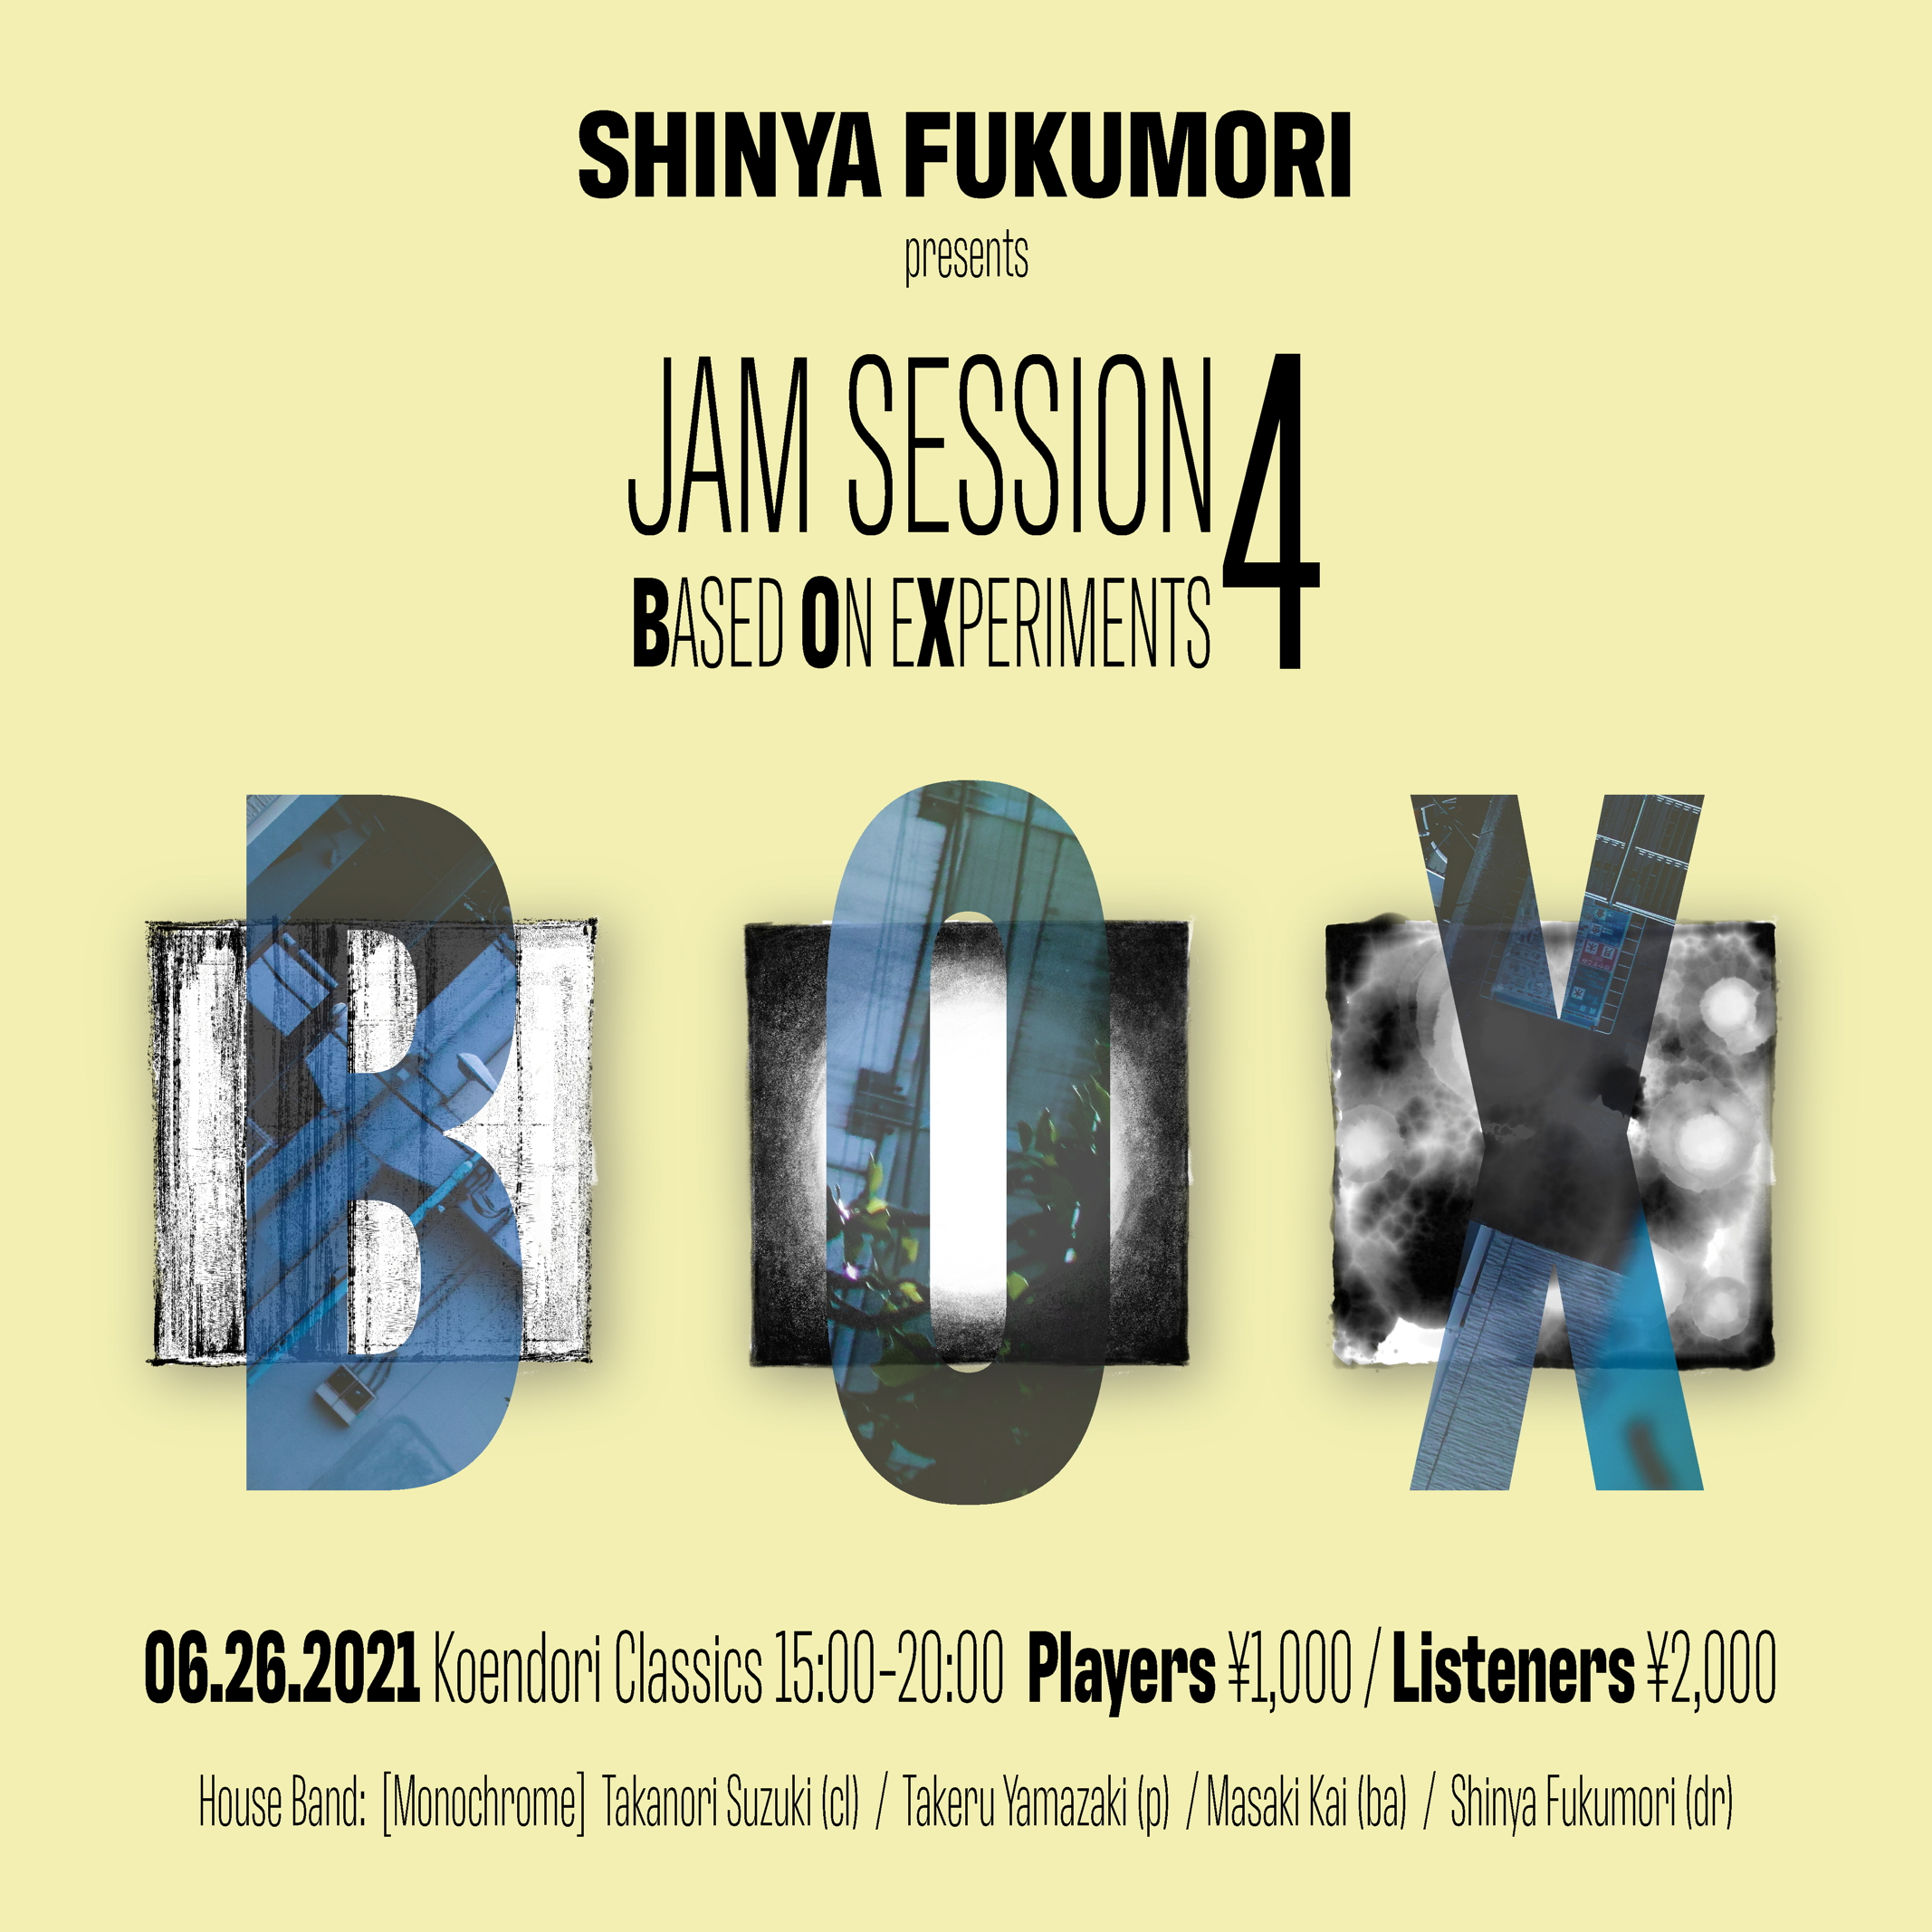 SHINYA FUKUMORI presents JAM SESSION BASED ON EXPERIMENTS 4